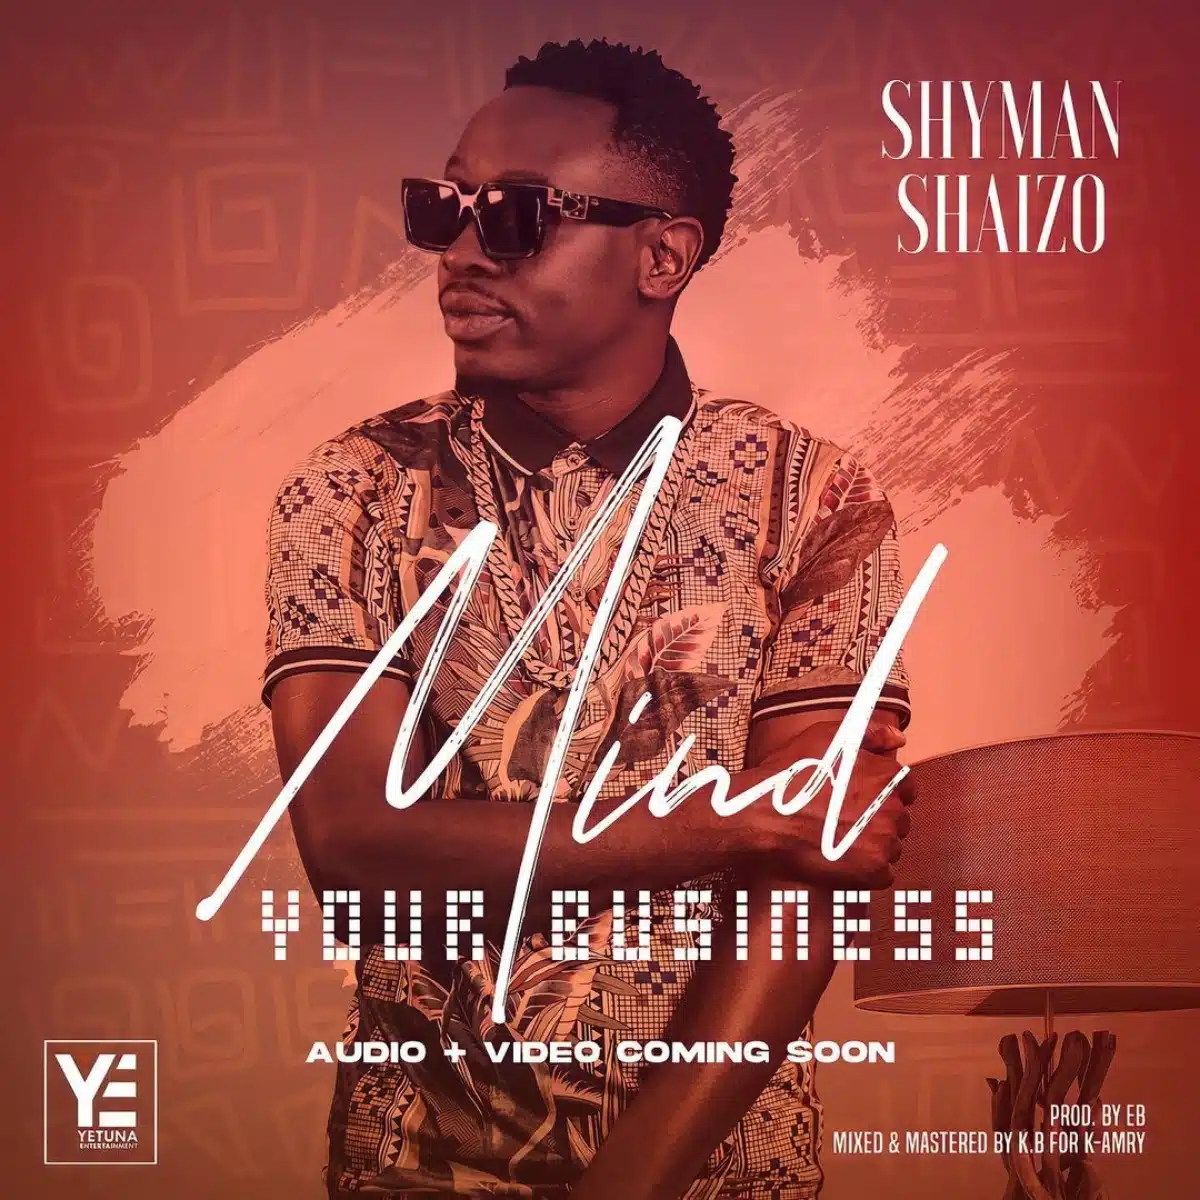 DOWNLOAD: Shyman Shaizo – “Mind Your Business” Mp3